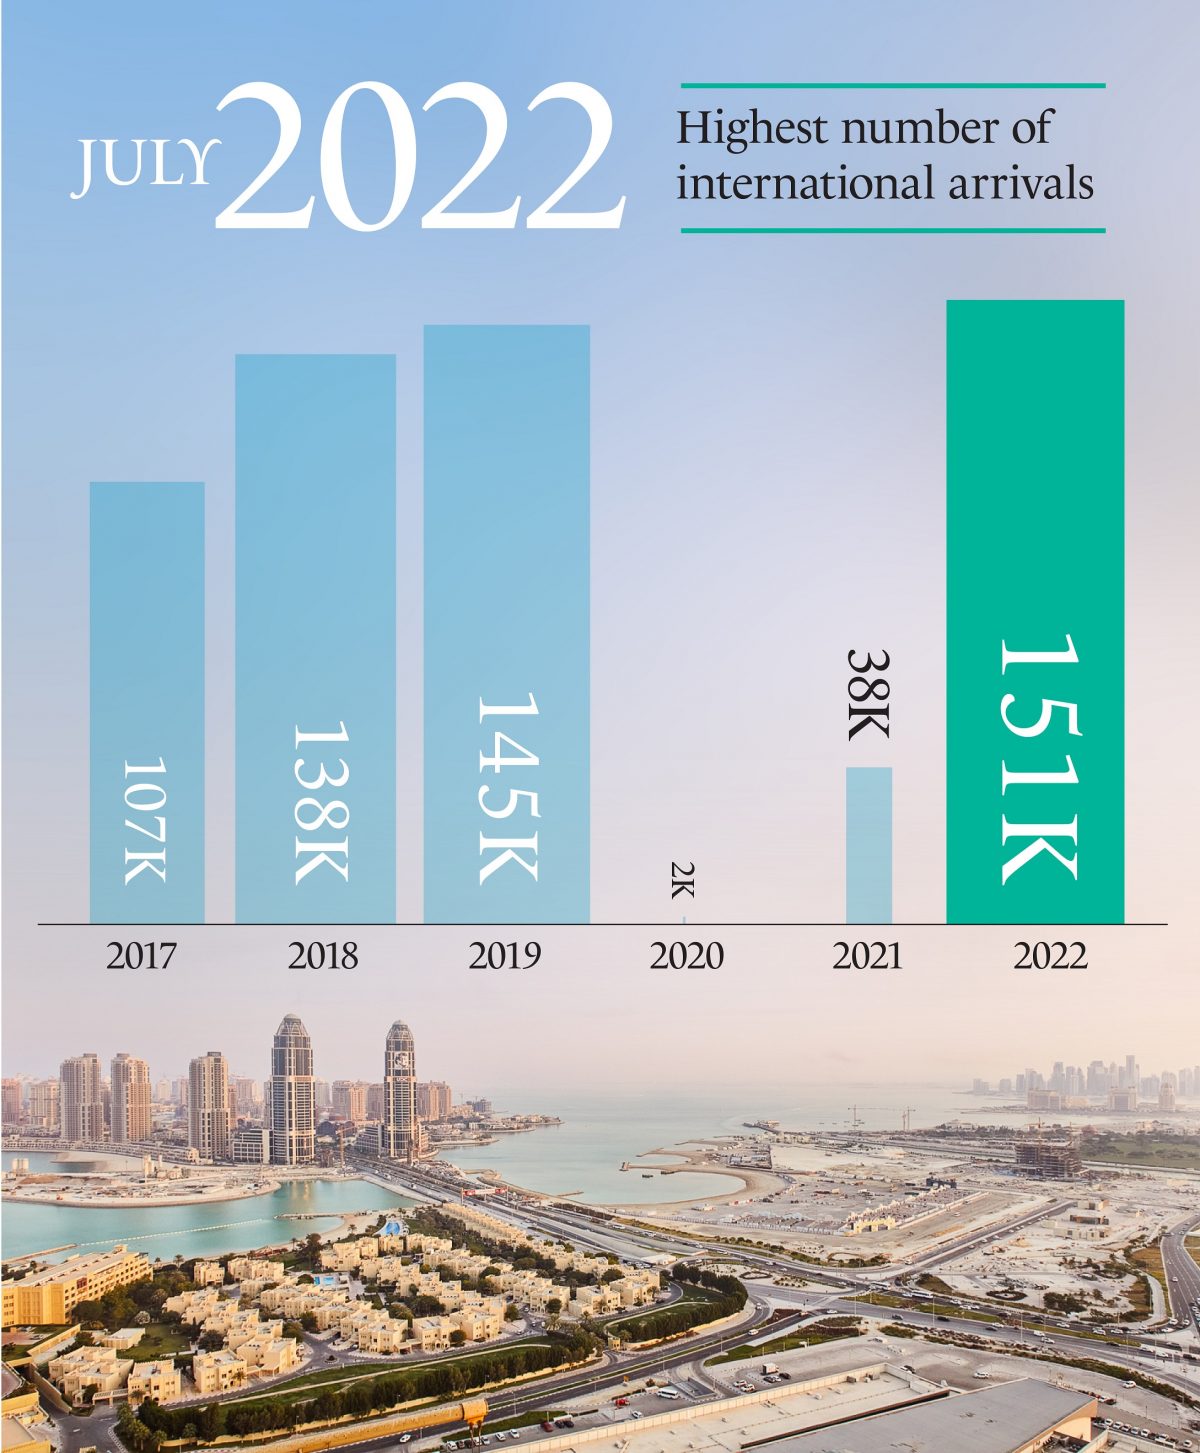 qatar tourism growth